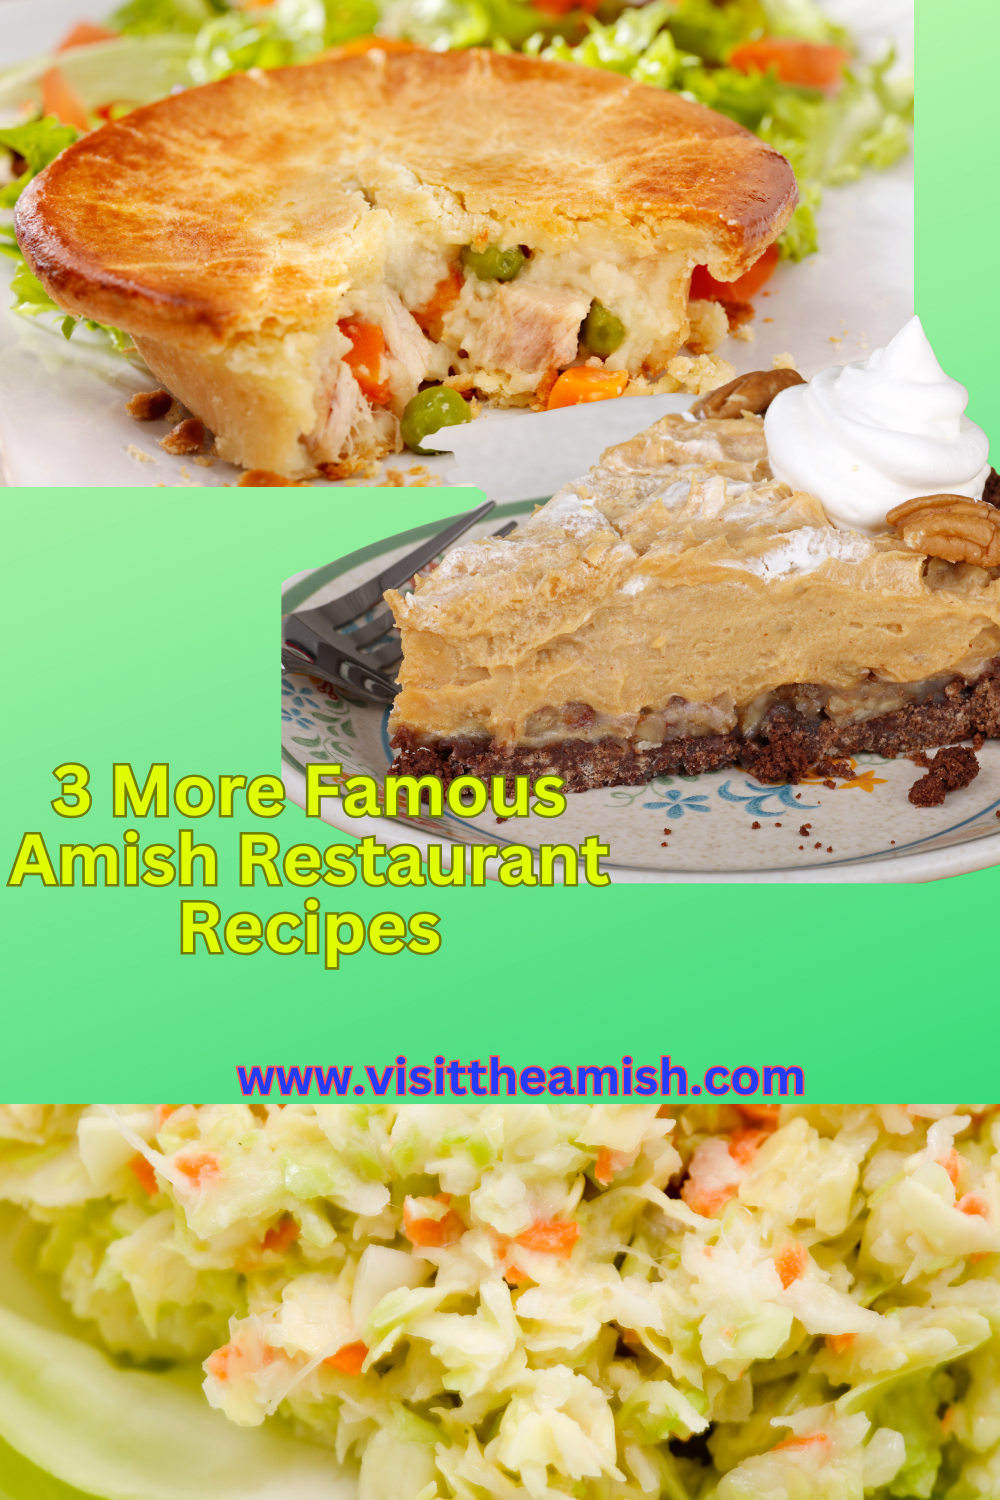 3 More Famous Amish Restaurant Recipes